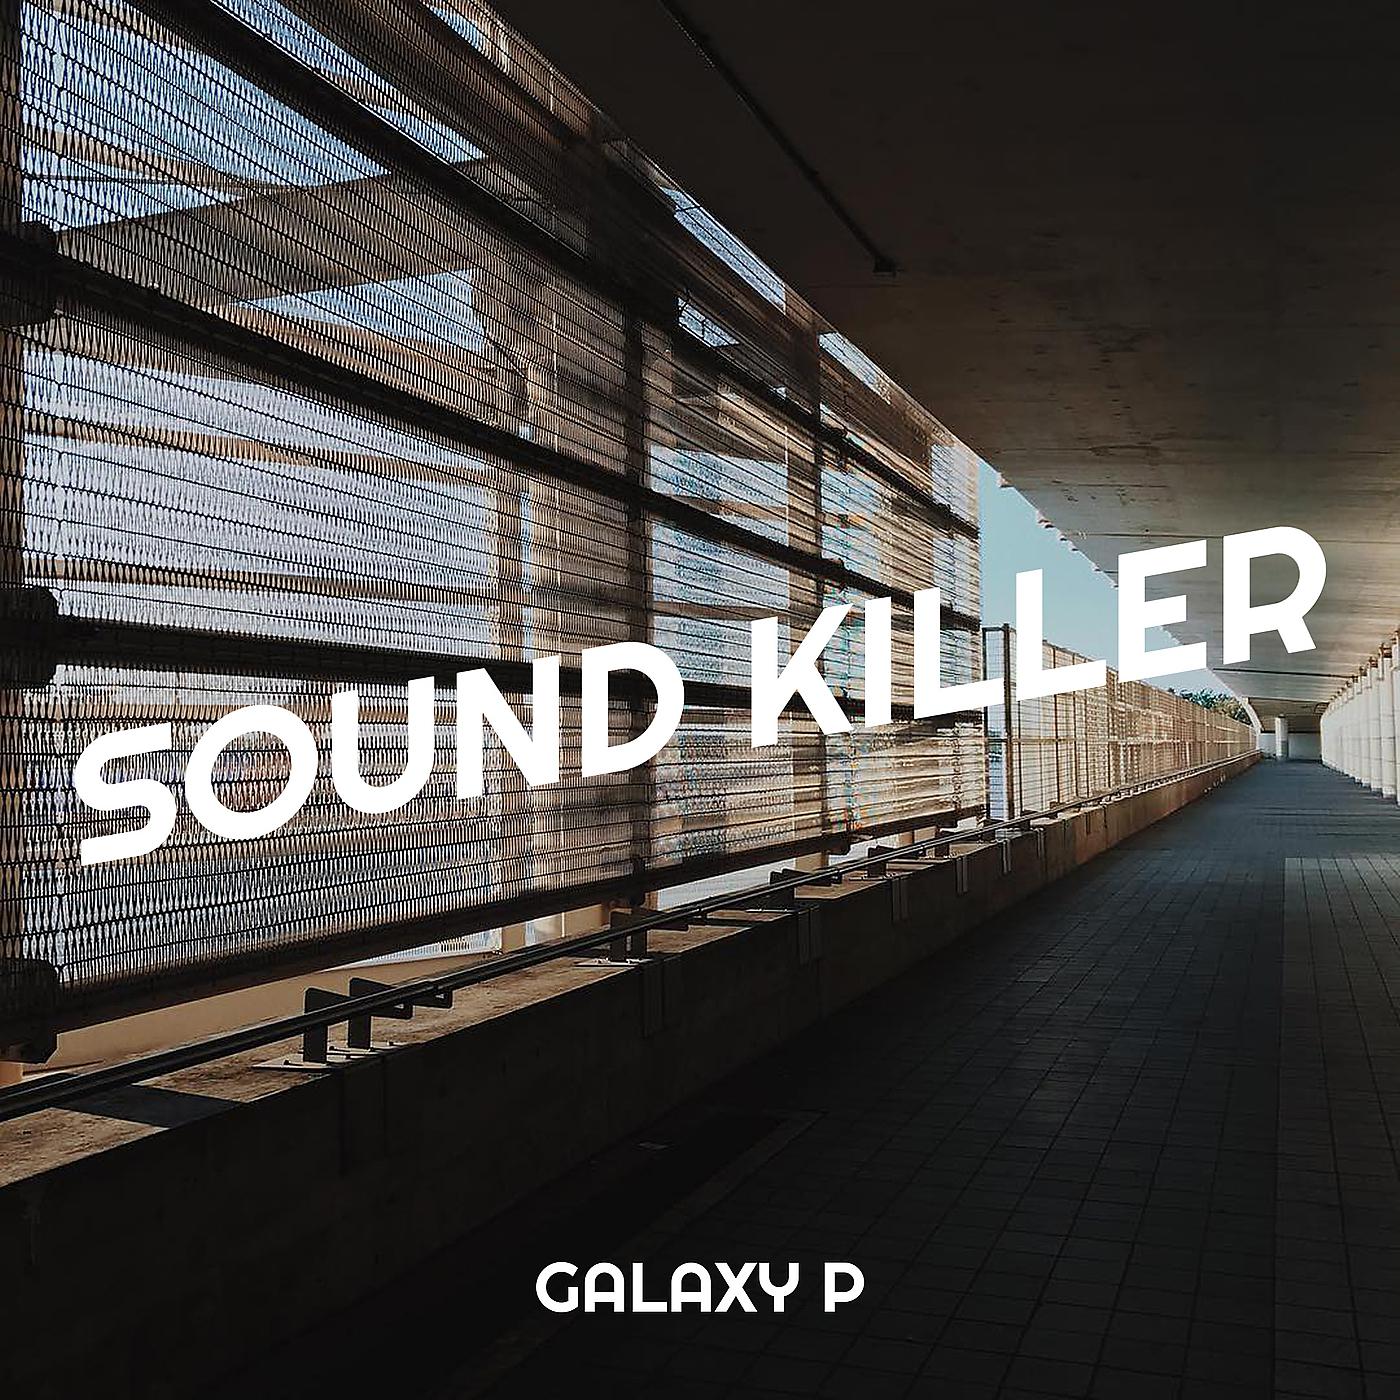 Постер альбома Sound Killer